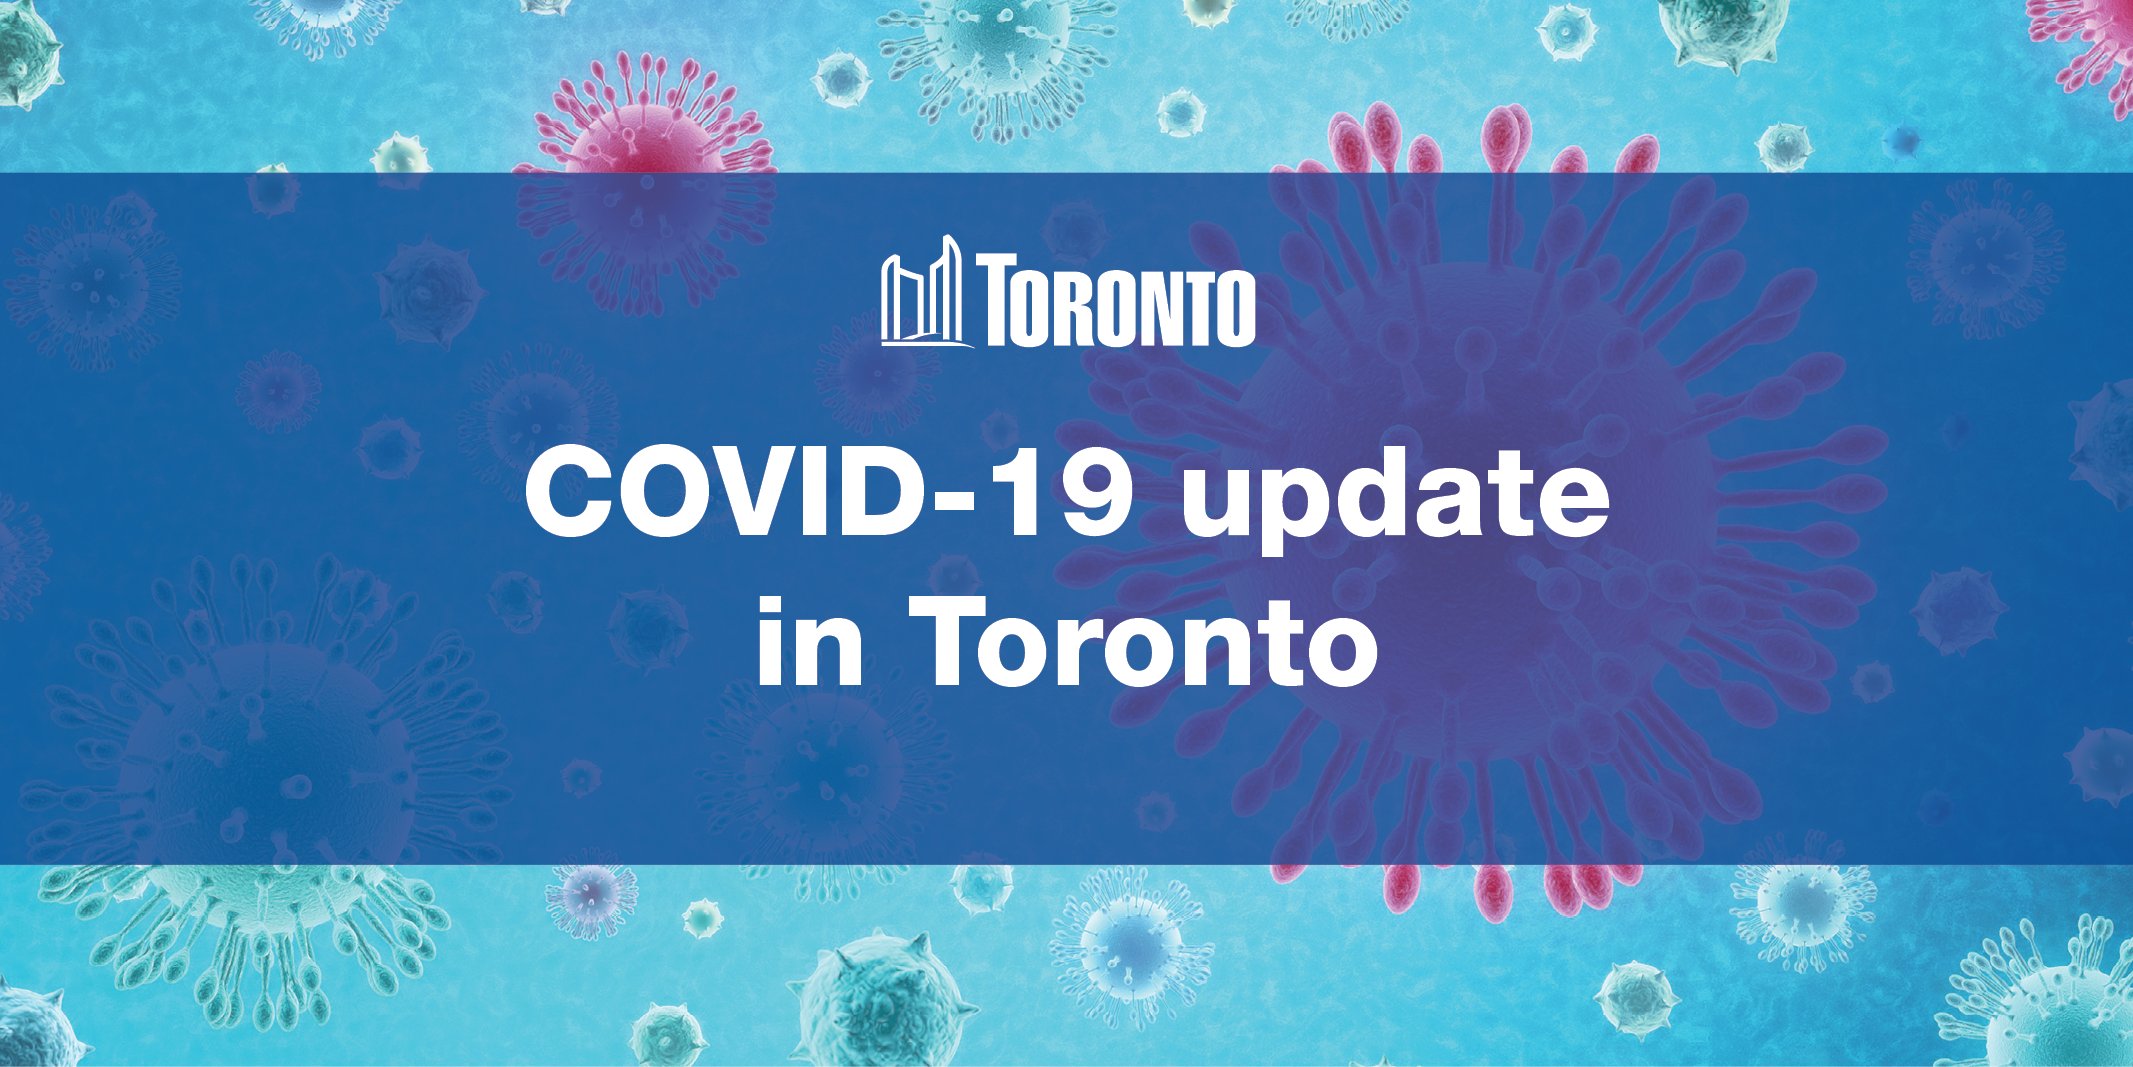 City of Toronto update on COVID-19